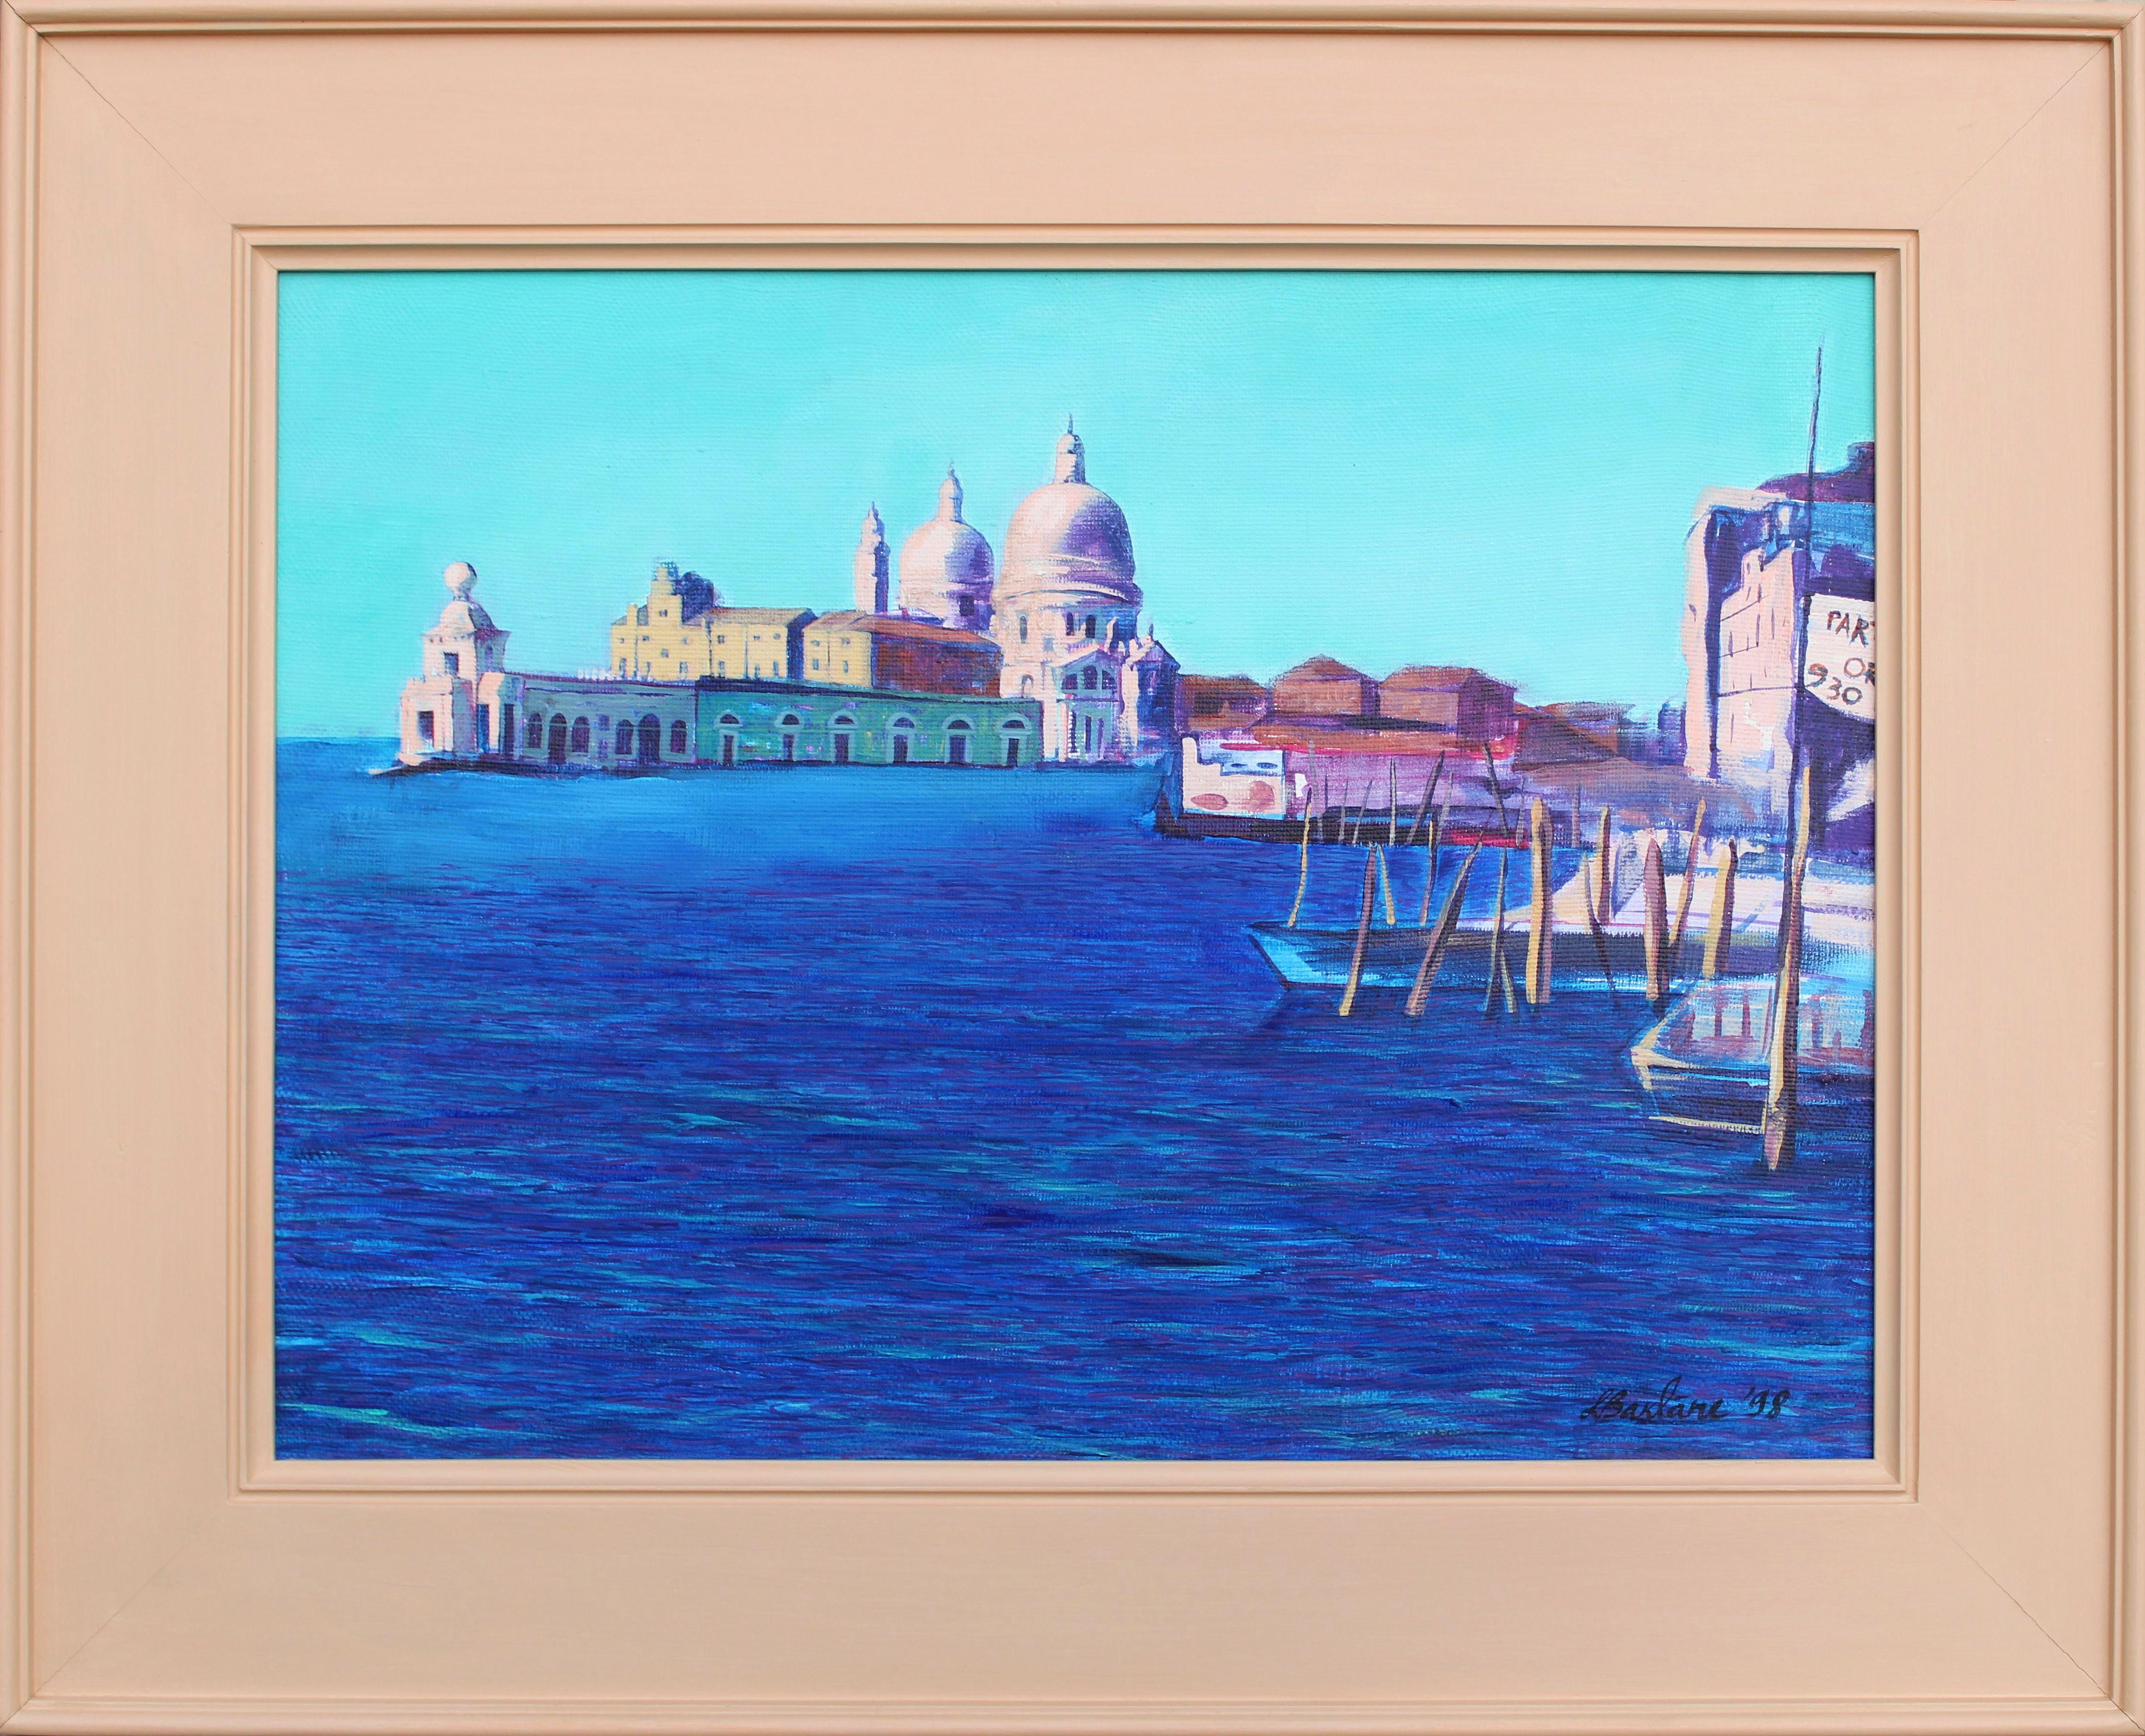 Venice. 1998, oil on canvas, 45x60 cm - Painting by Liena Baklane